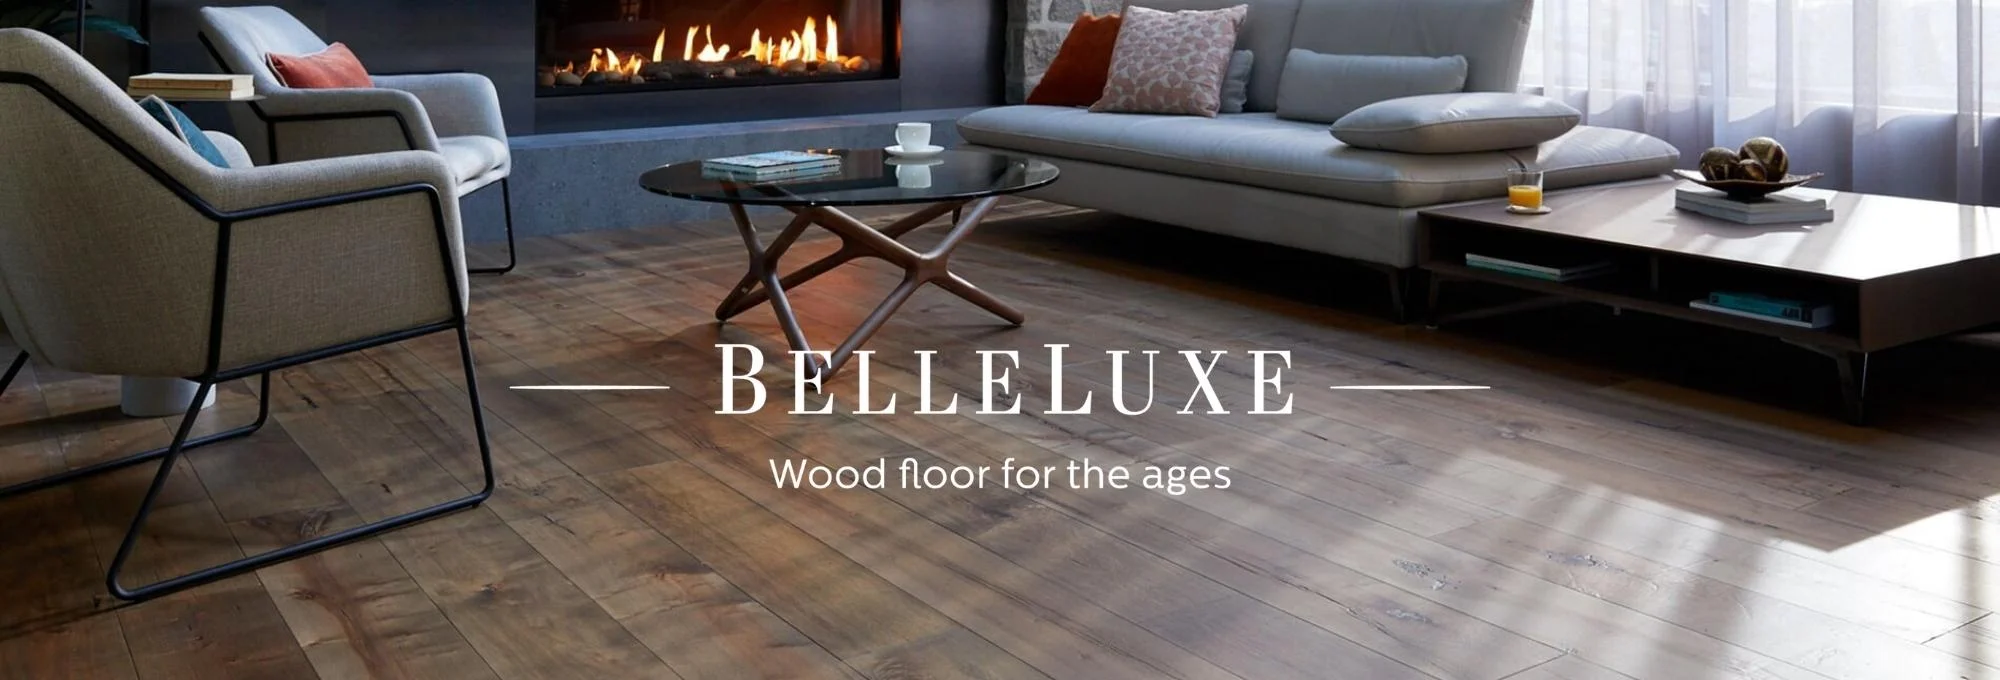 Living room hardwood flooring | Henson's Greater Tennessee Flooring